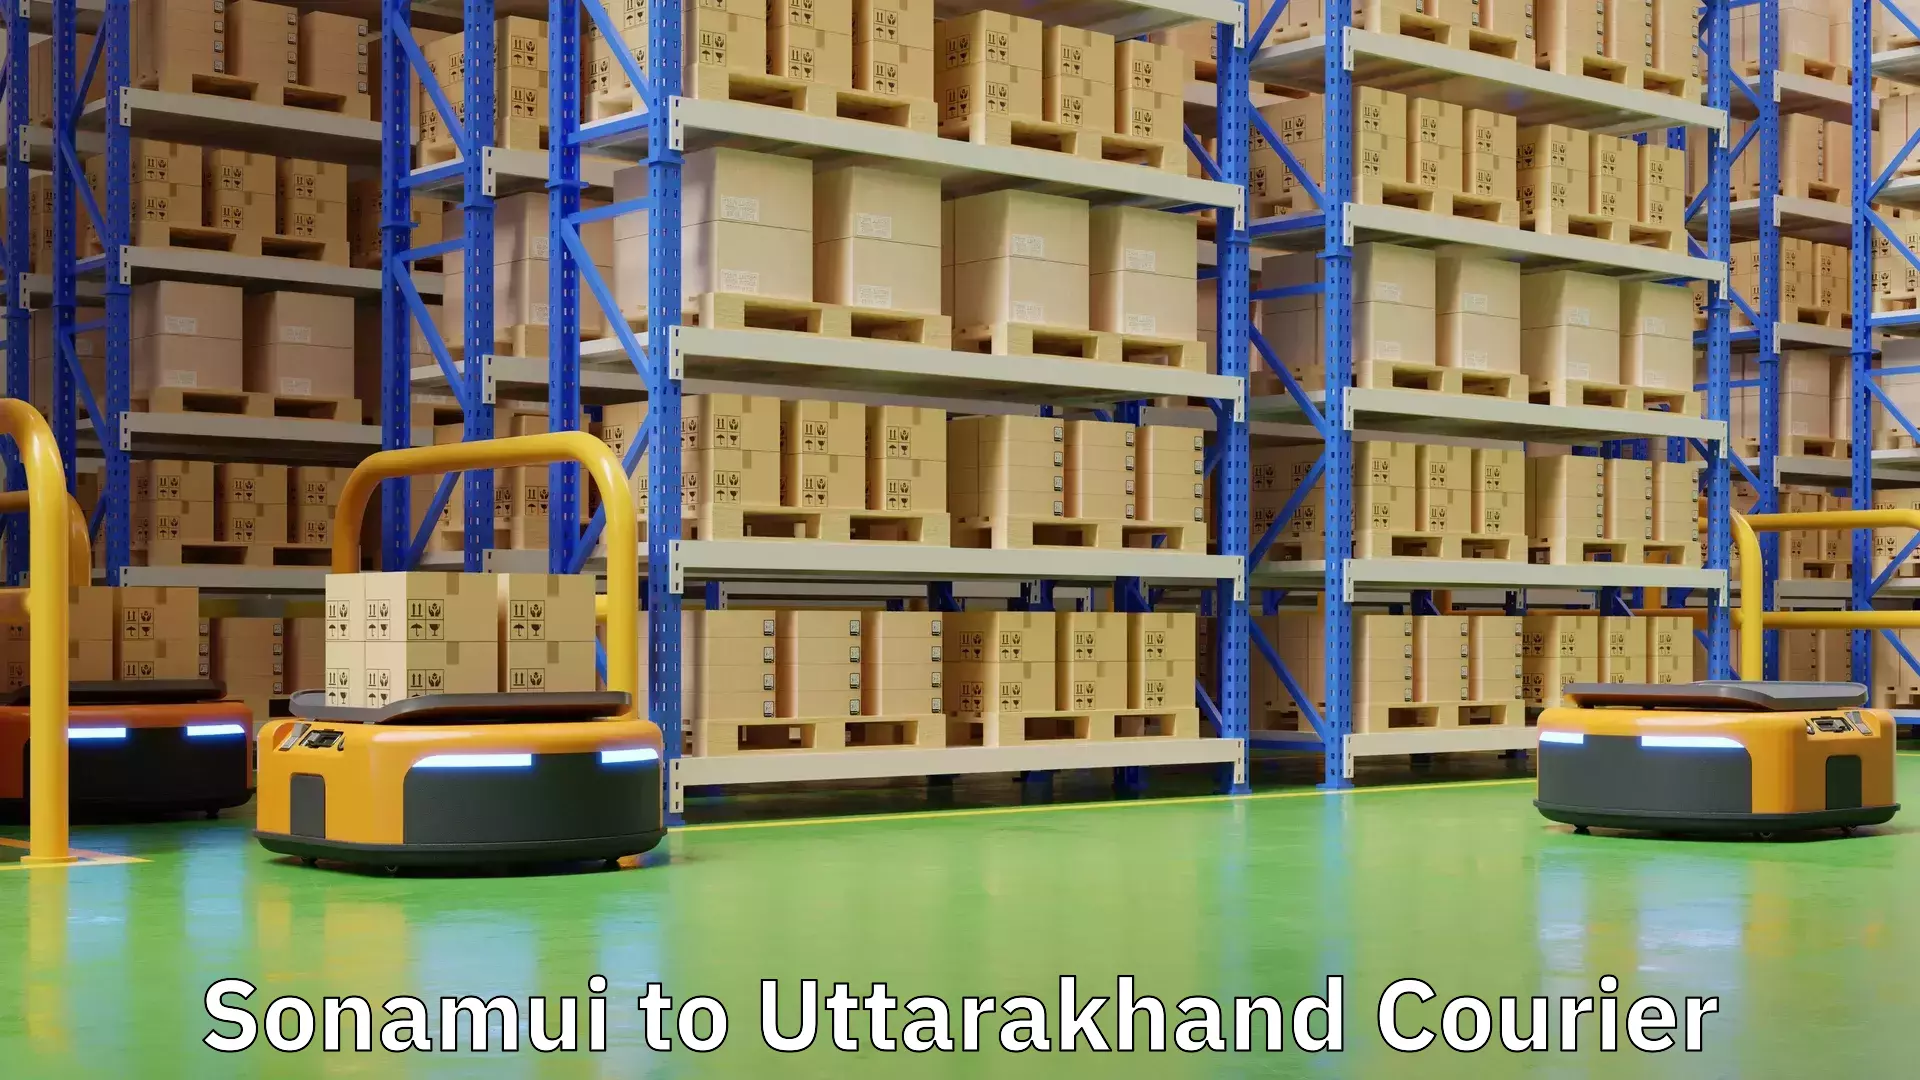 State-of-the-art courier technology Sonamui to Uttarakhand